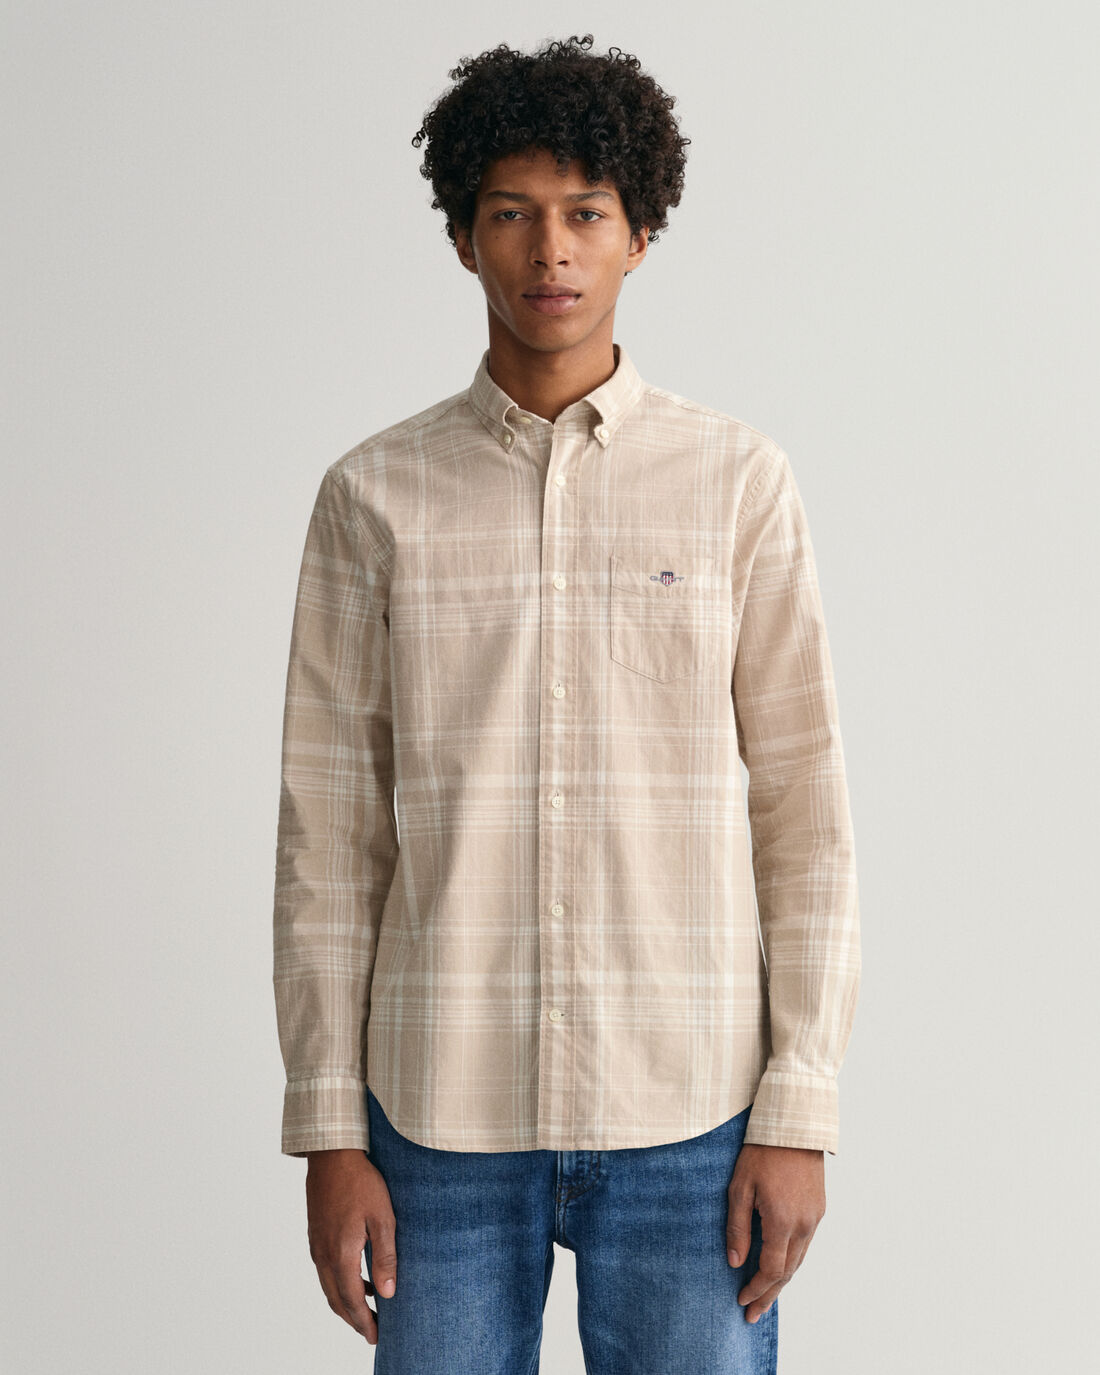 Gant - Cotton Linen Check Shirt